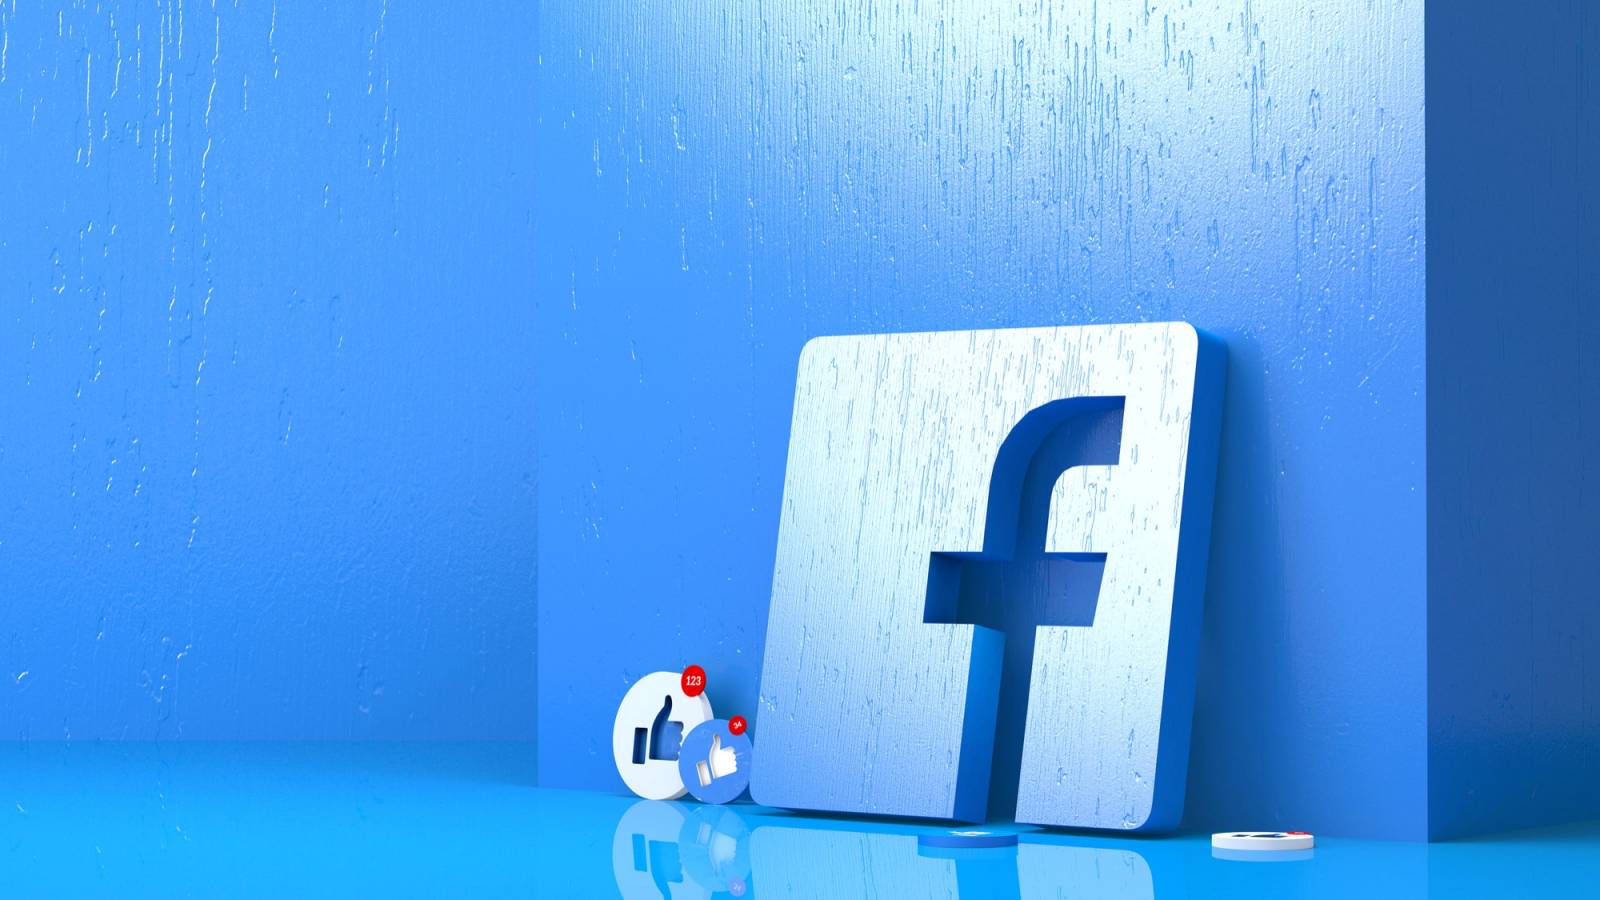 Facebook, Instagram si Threads vor Marca Imaginile Facute de Inteligenta Artificiala